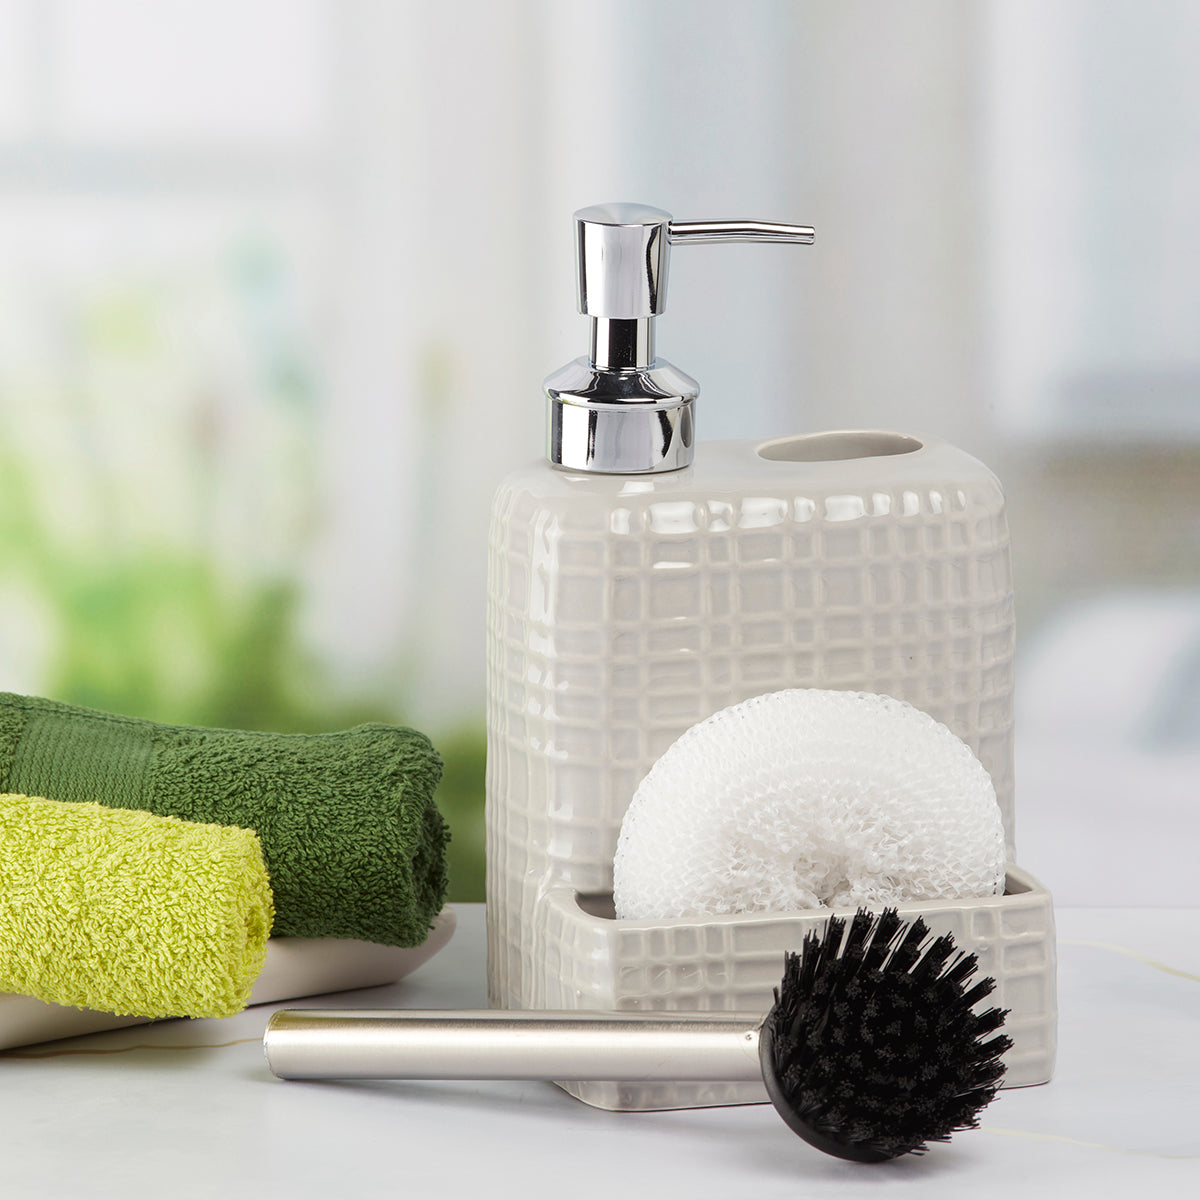 Ceramic Soap Dispenser Pump for Bathroom for Bath Gel, Lotion, Shampoo (8212)